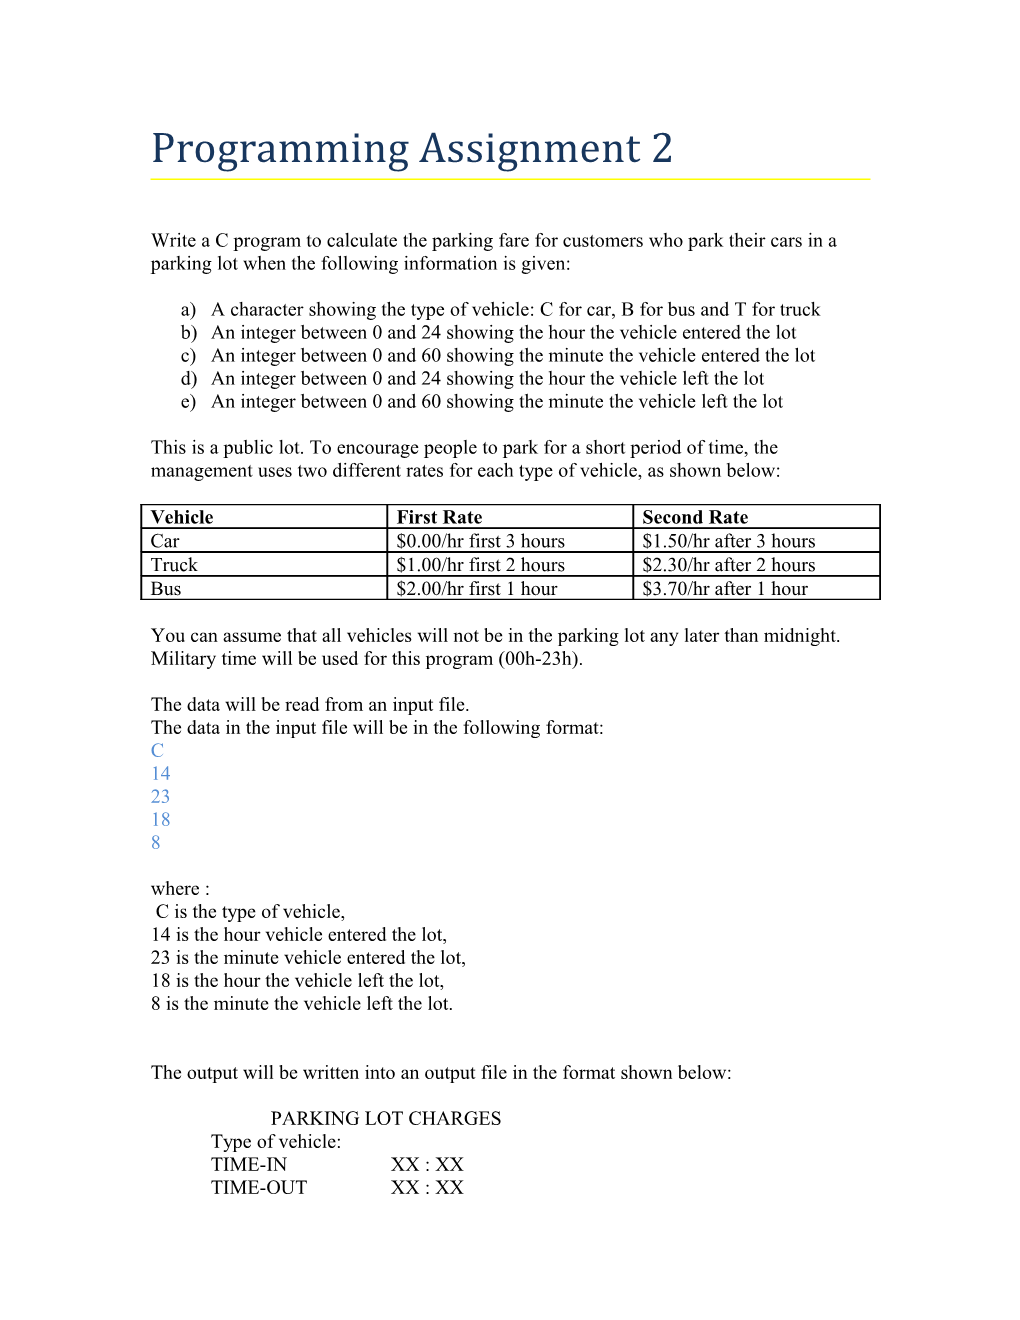 Programming Assignment 2